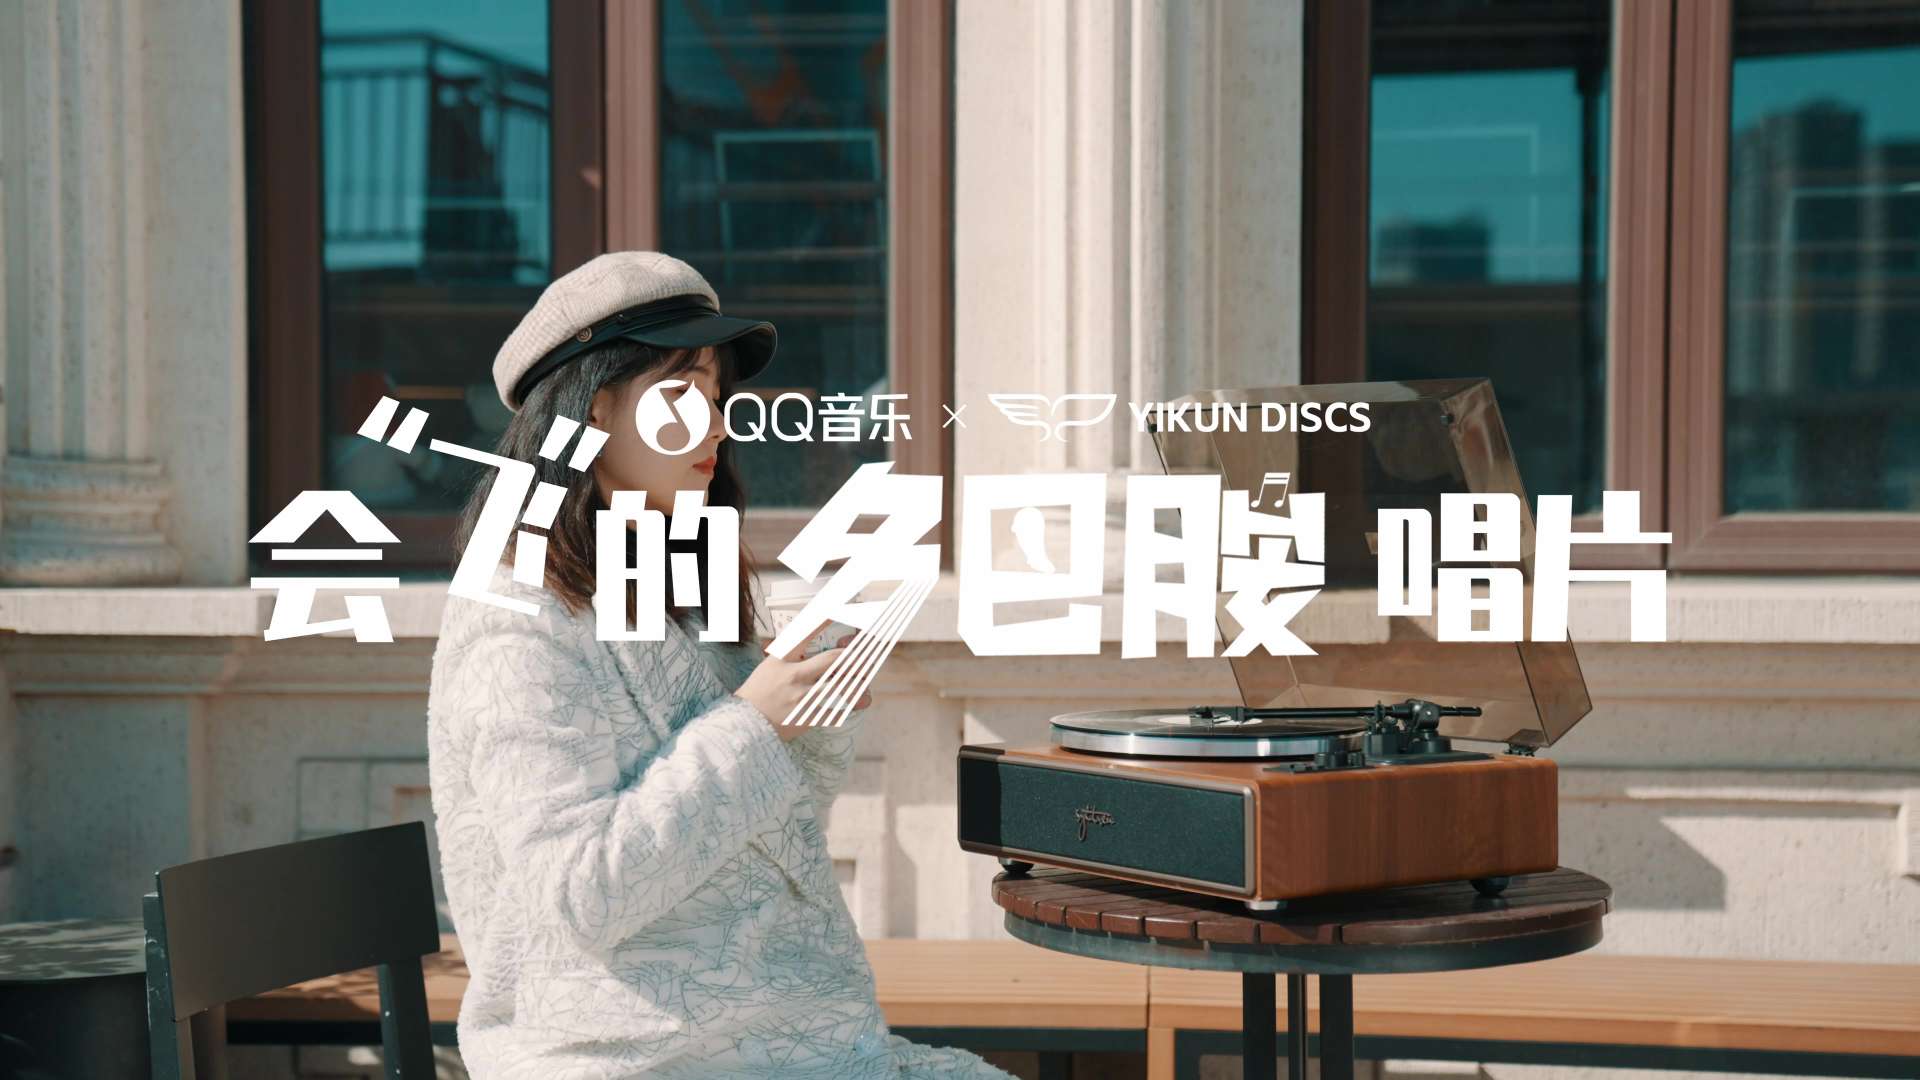 QQ音乐 | Yikun Discs(翼鲲飞盘) - “会飞的多巴胺”